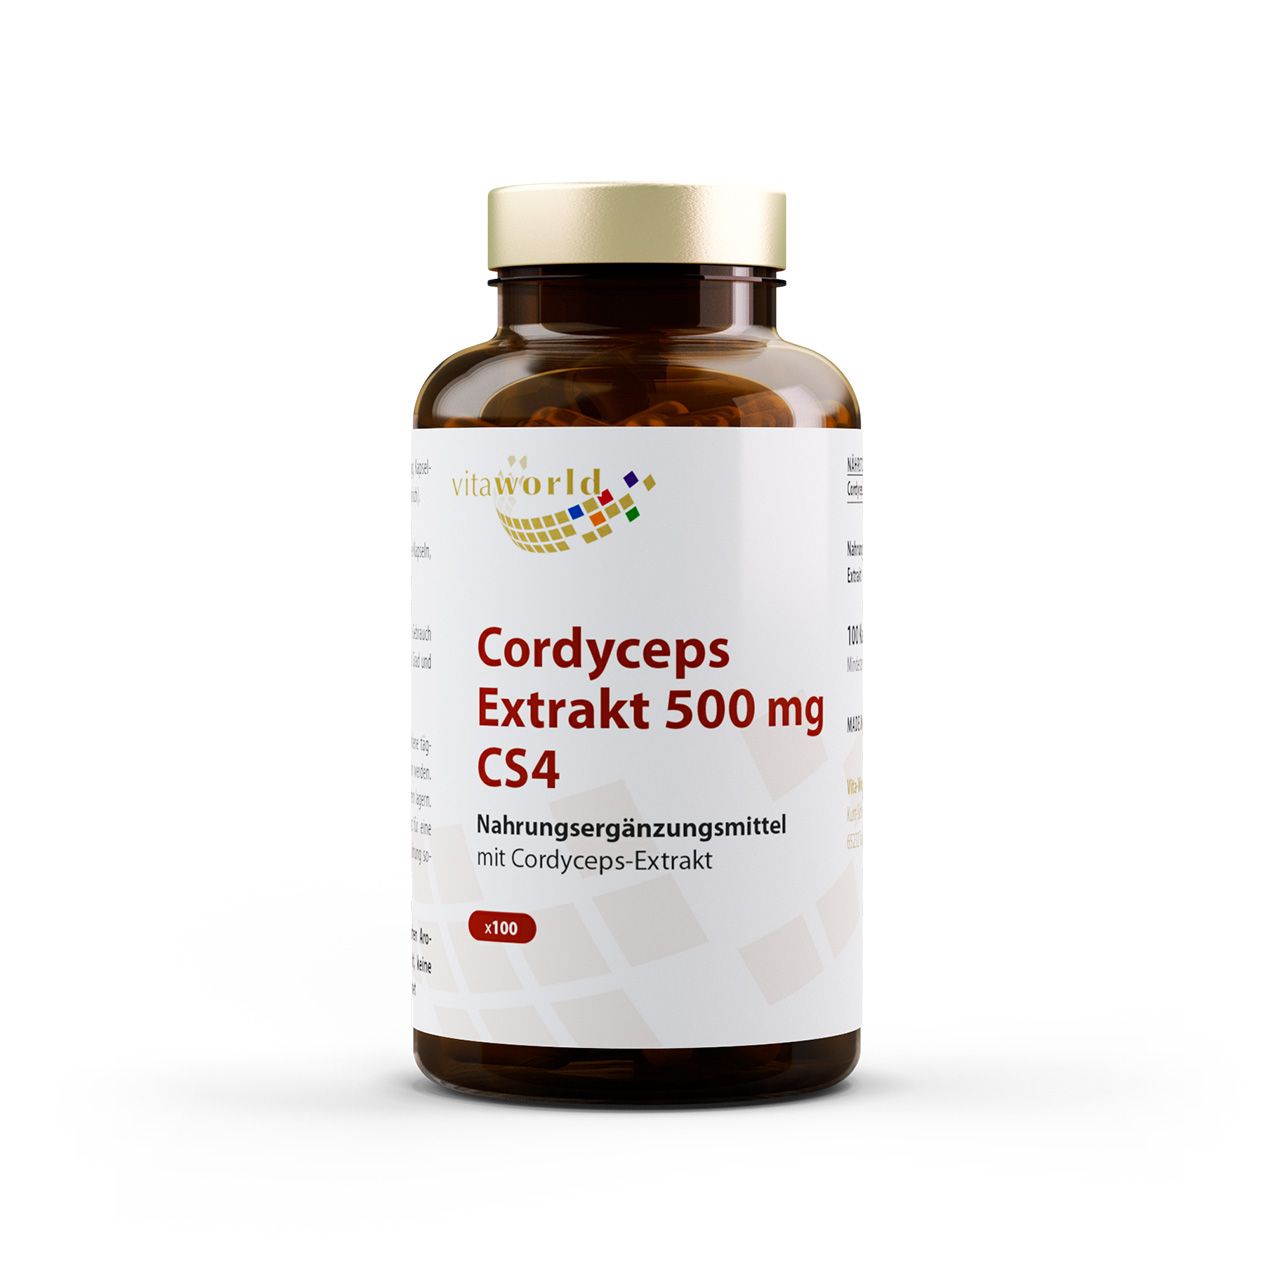 Vitaworld Cordyceps Extrakt 500 mg | 100 Kapseln | Herstellung aus Raupenpilz | vegan | gluten- und laktosefrei